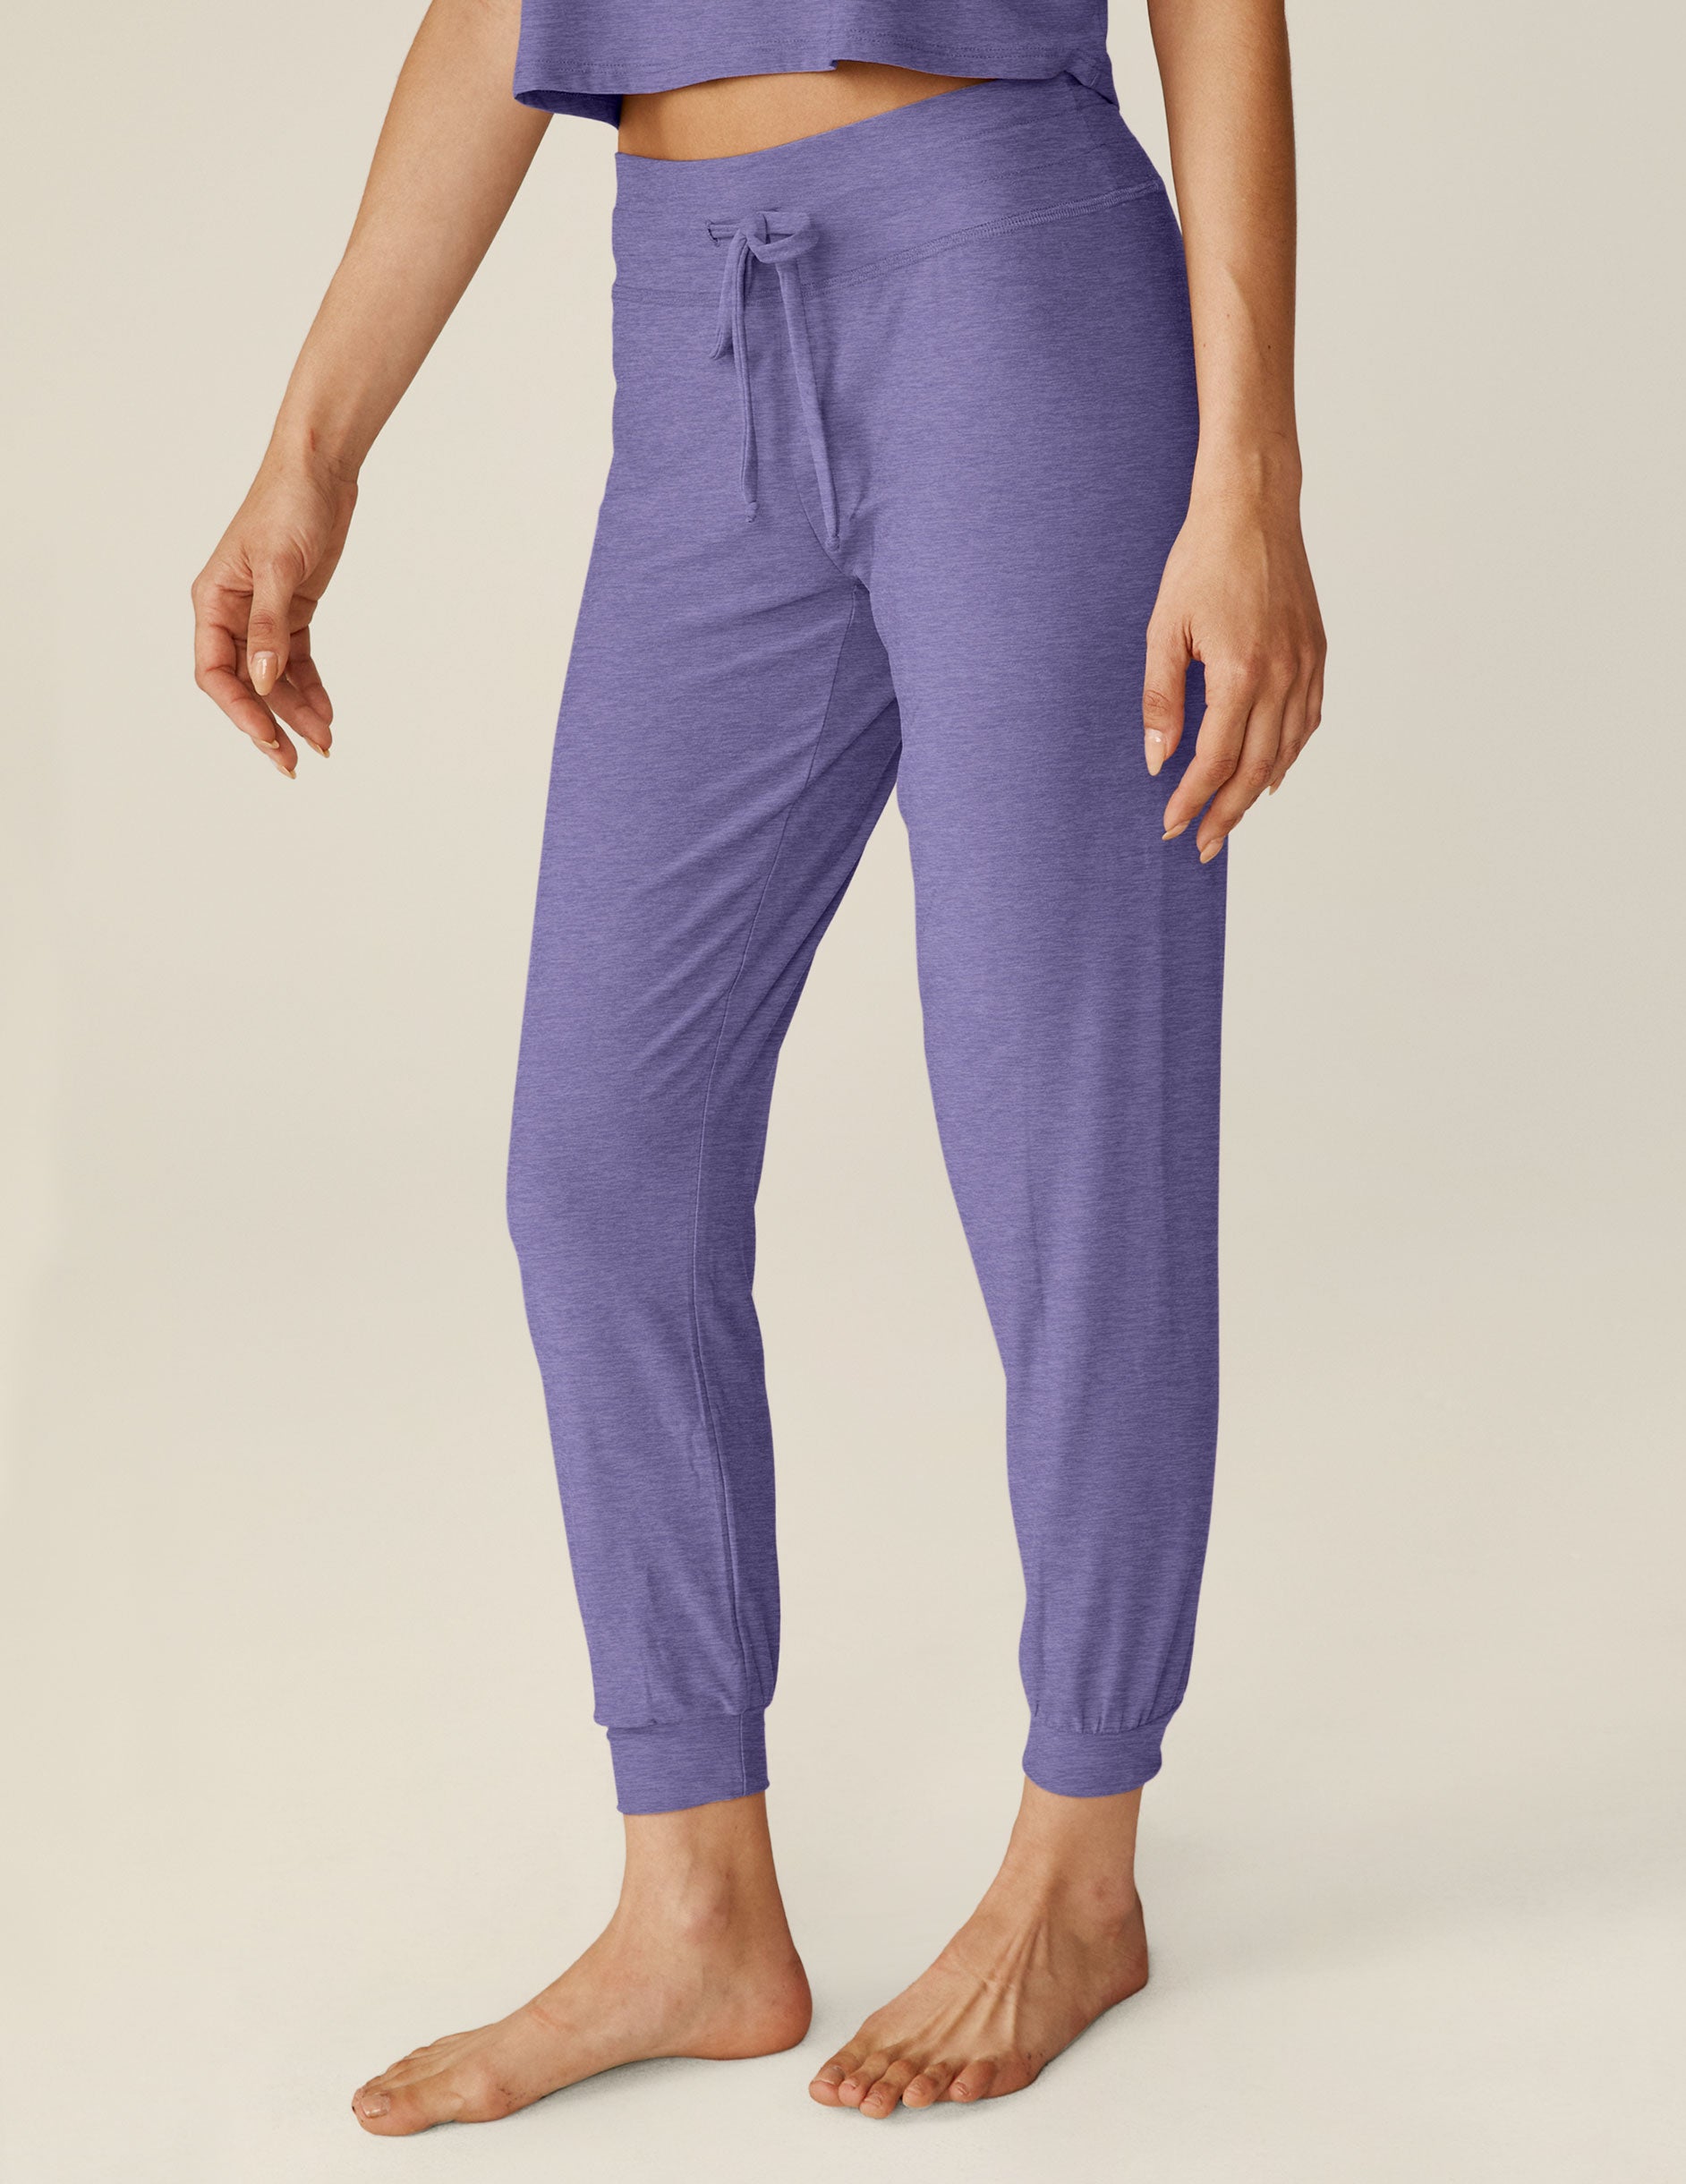 purple lounge sweatpants with a drawstring. 